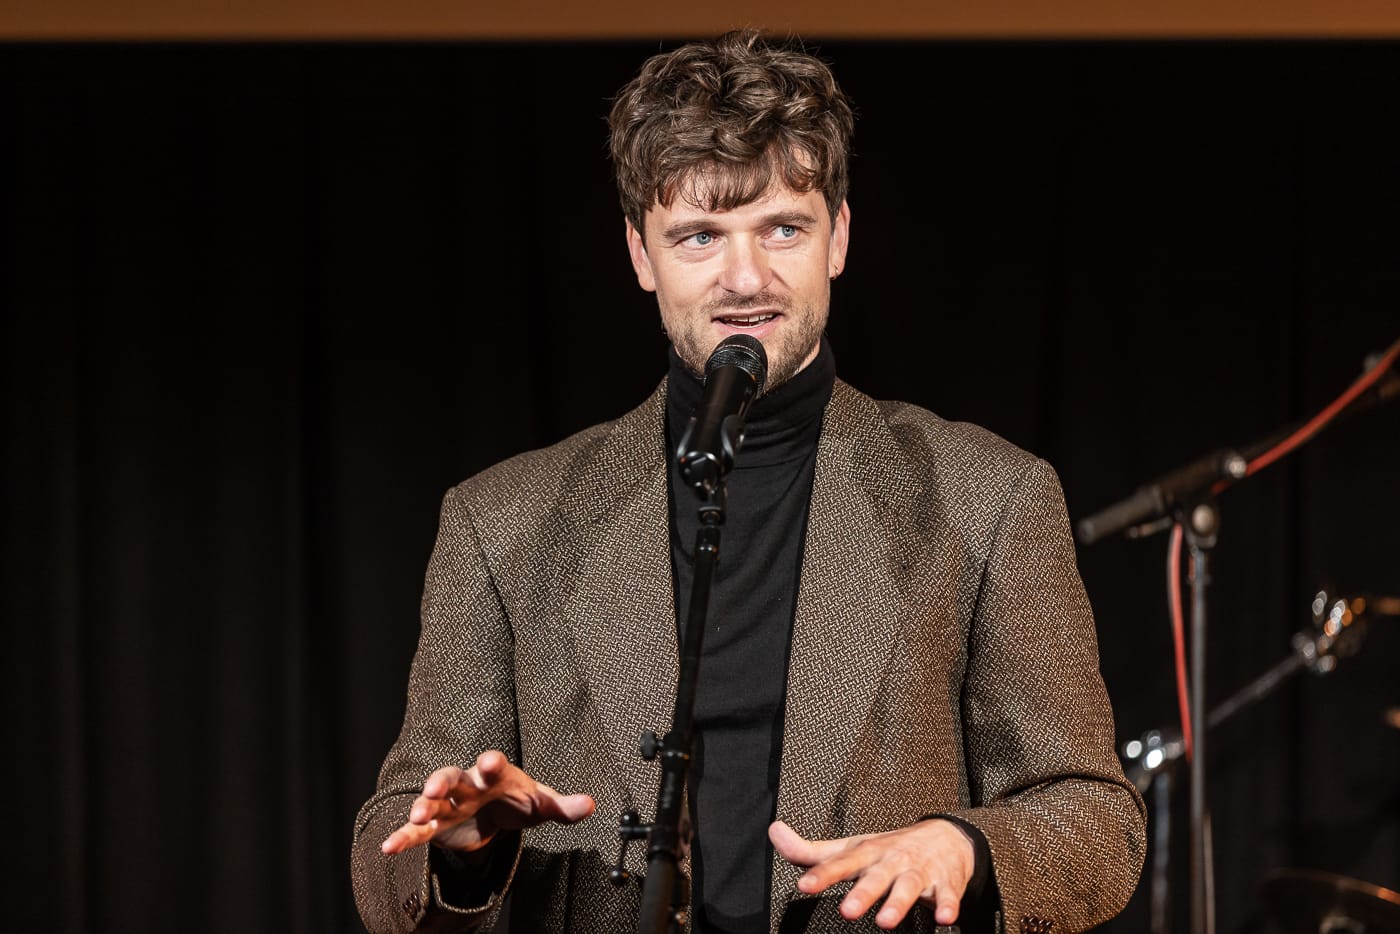 En mand i brun jakke, der står foran en mikrofon og holder en kulturpolitisk tale.